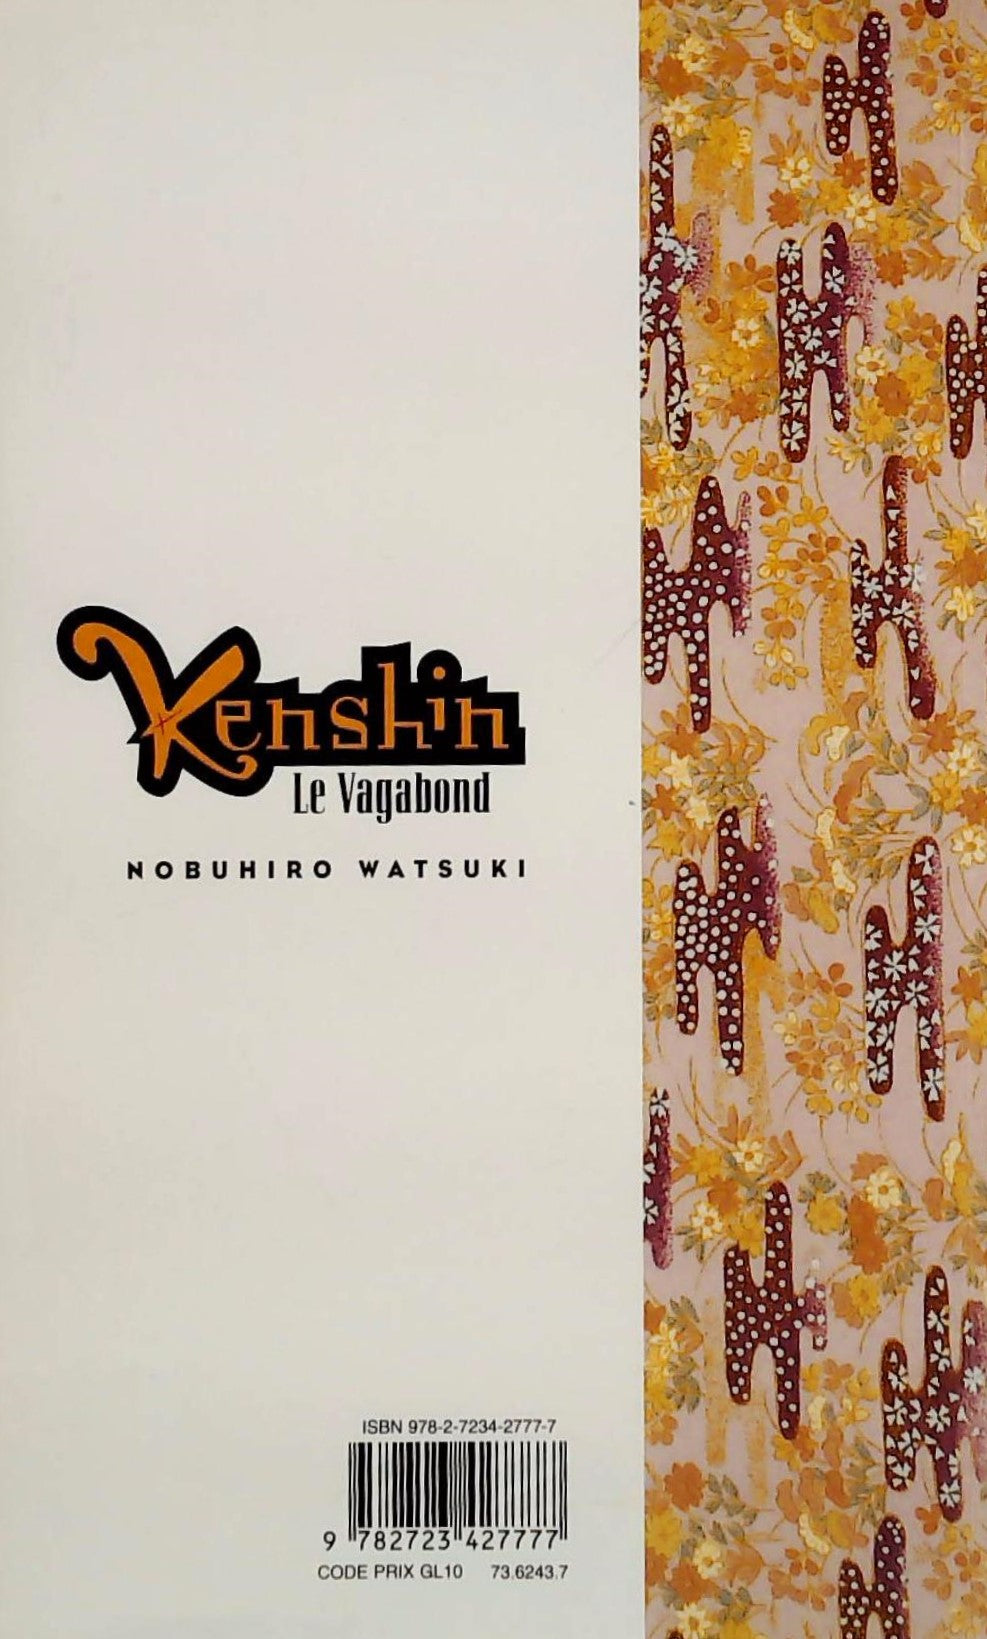 Kenshin le vagabond # 3 : Le vagabond (Nusuhiro Watsuki)